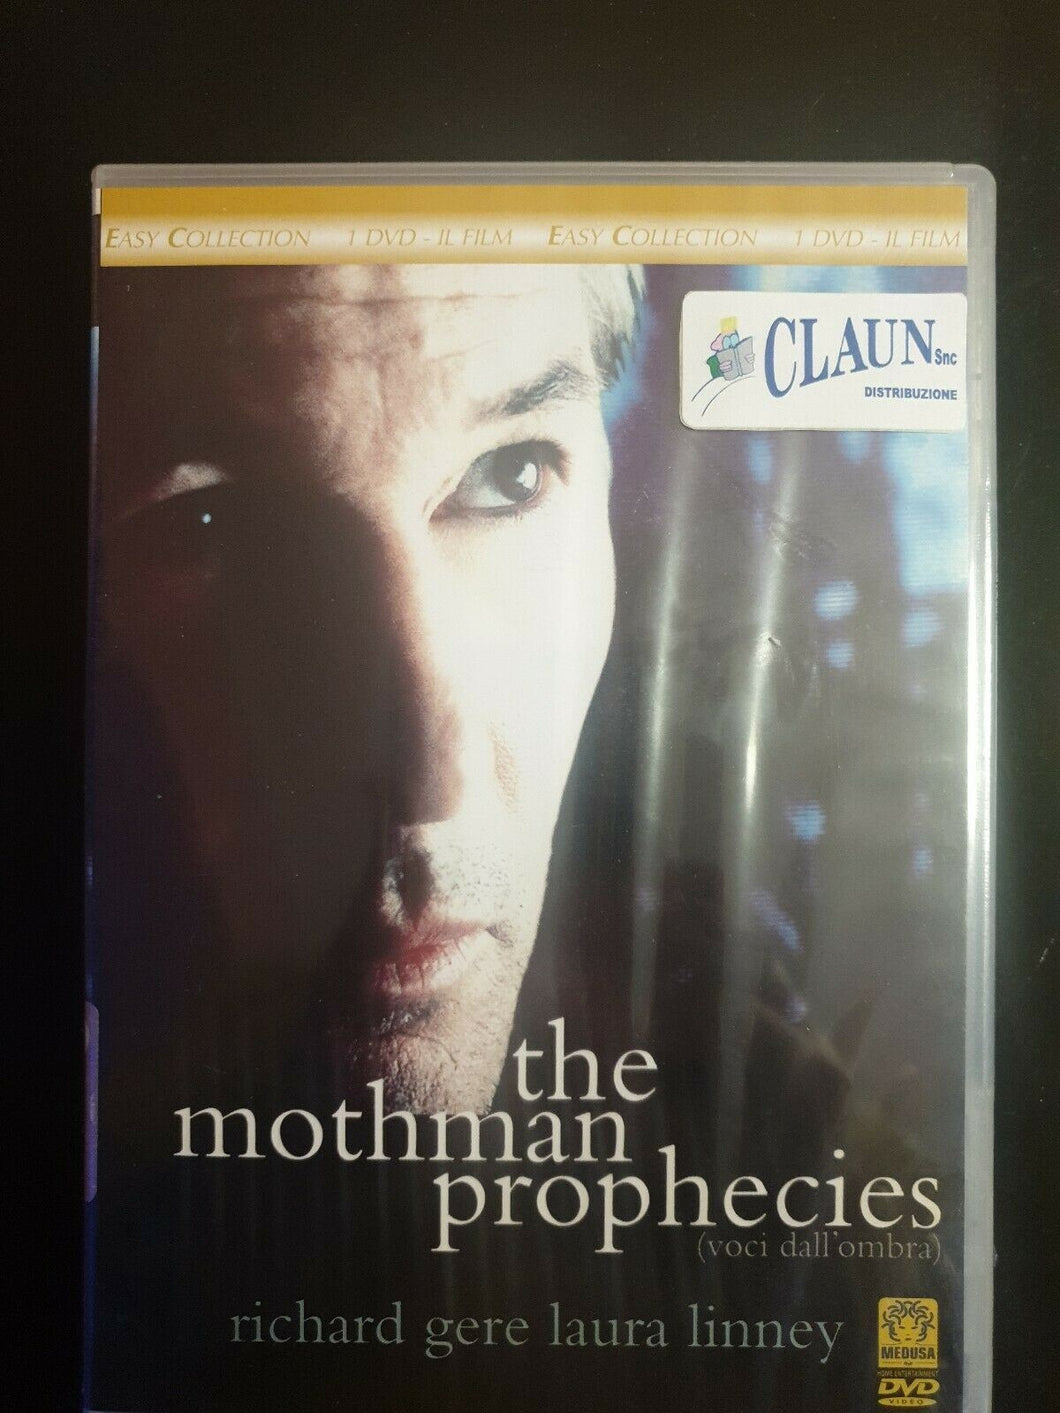 THE MOTHMAN PROPHECIES DVD MEDUSA Nuovo